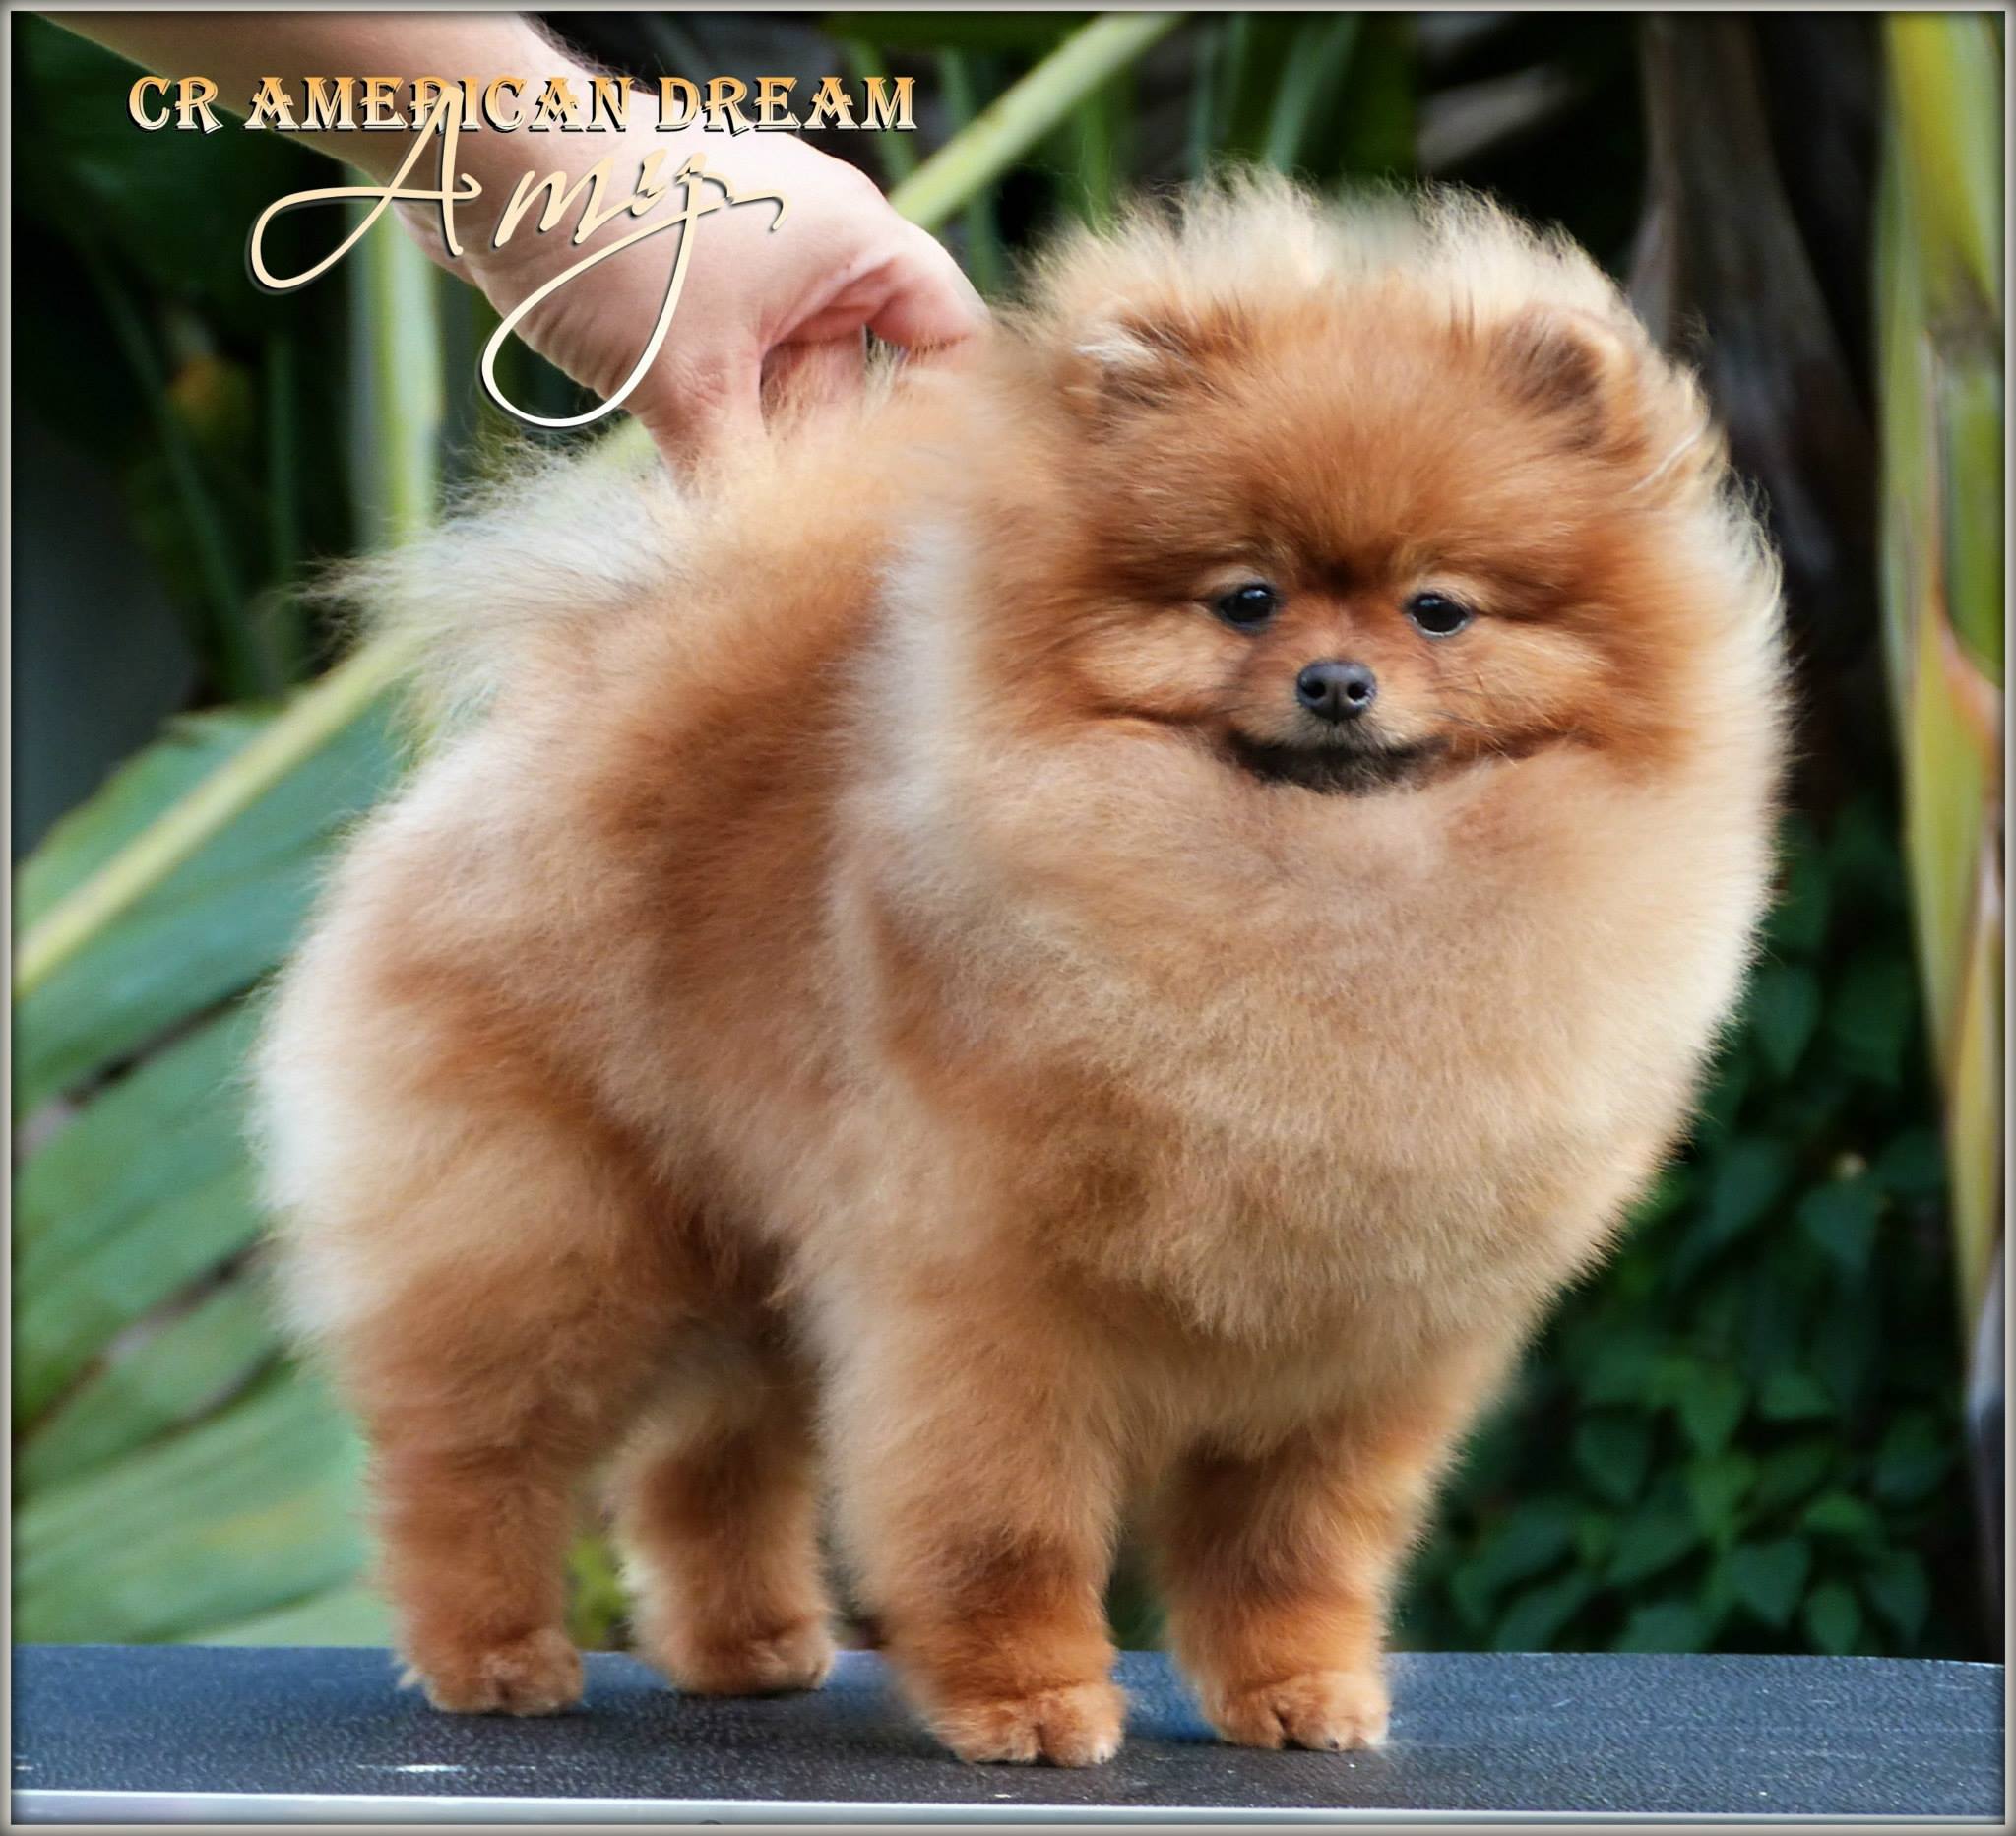 Pomeranian CR AMERICAN DREAM 